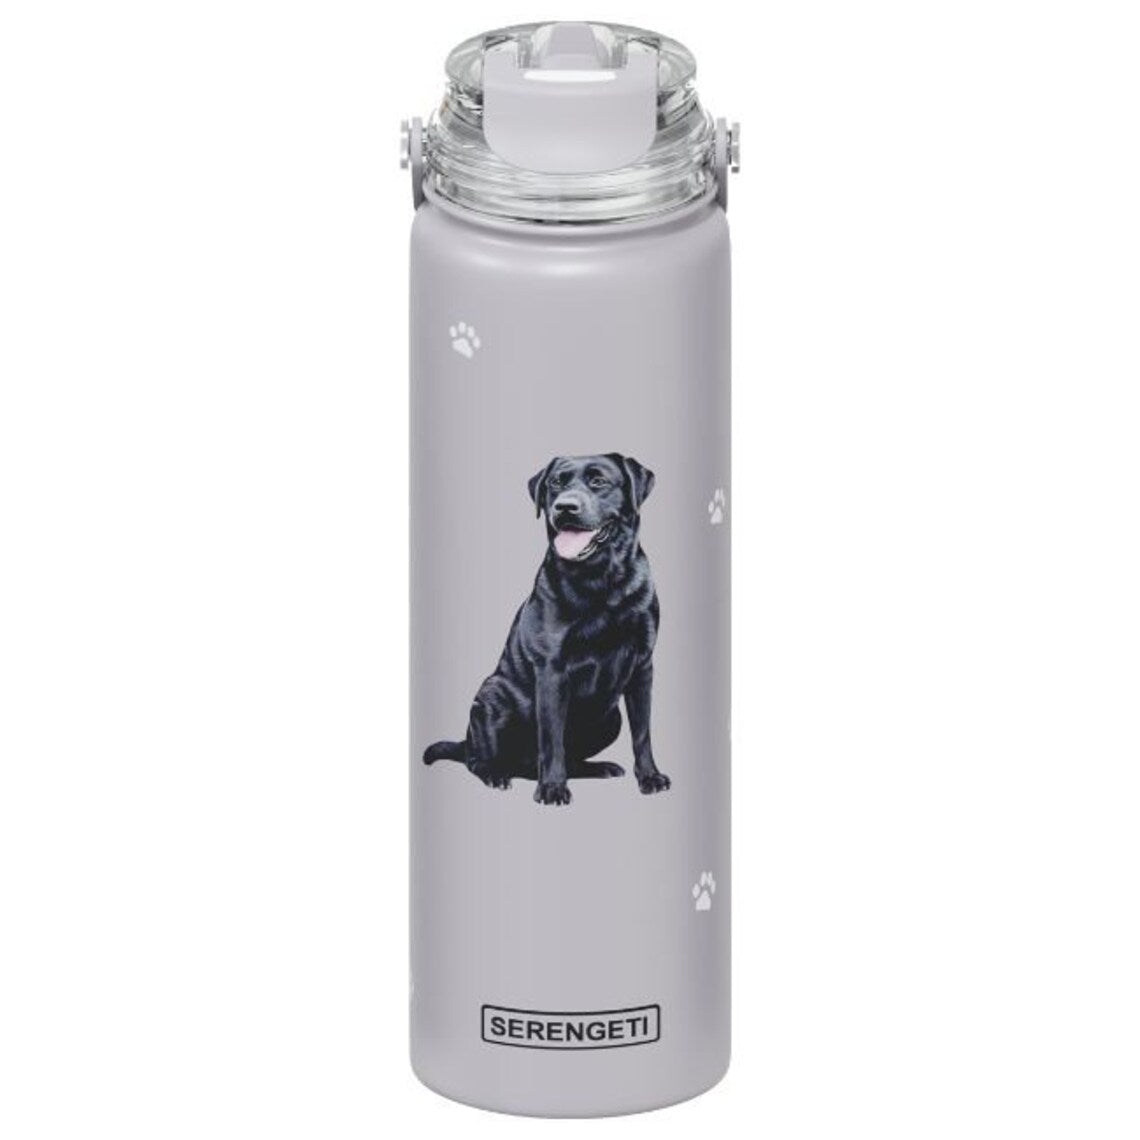 SERENGETI Stainless Steel Water Bottle 24oz - Labrador Black